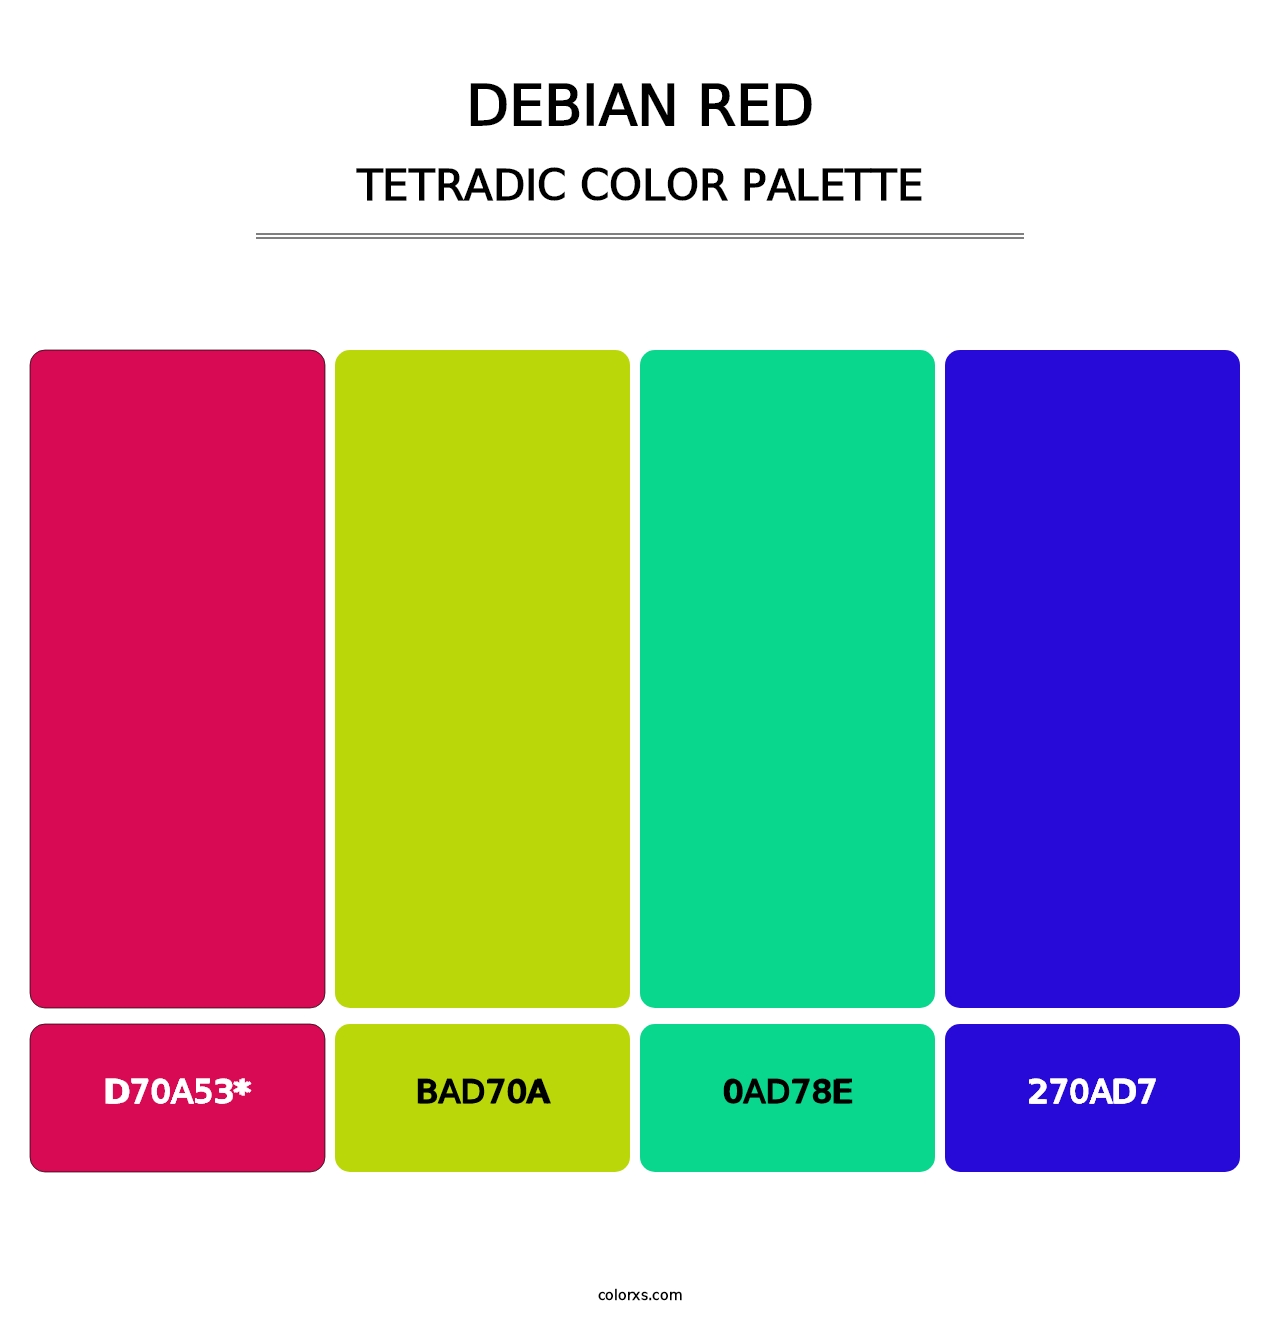 Debian red - Tetradic Color Palette